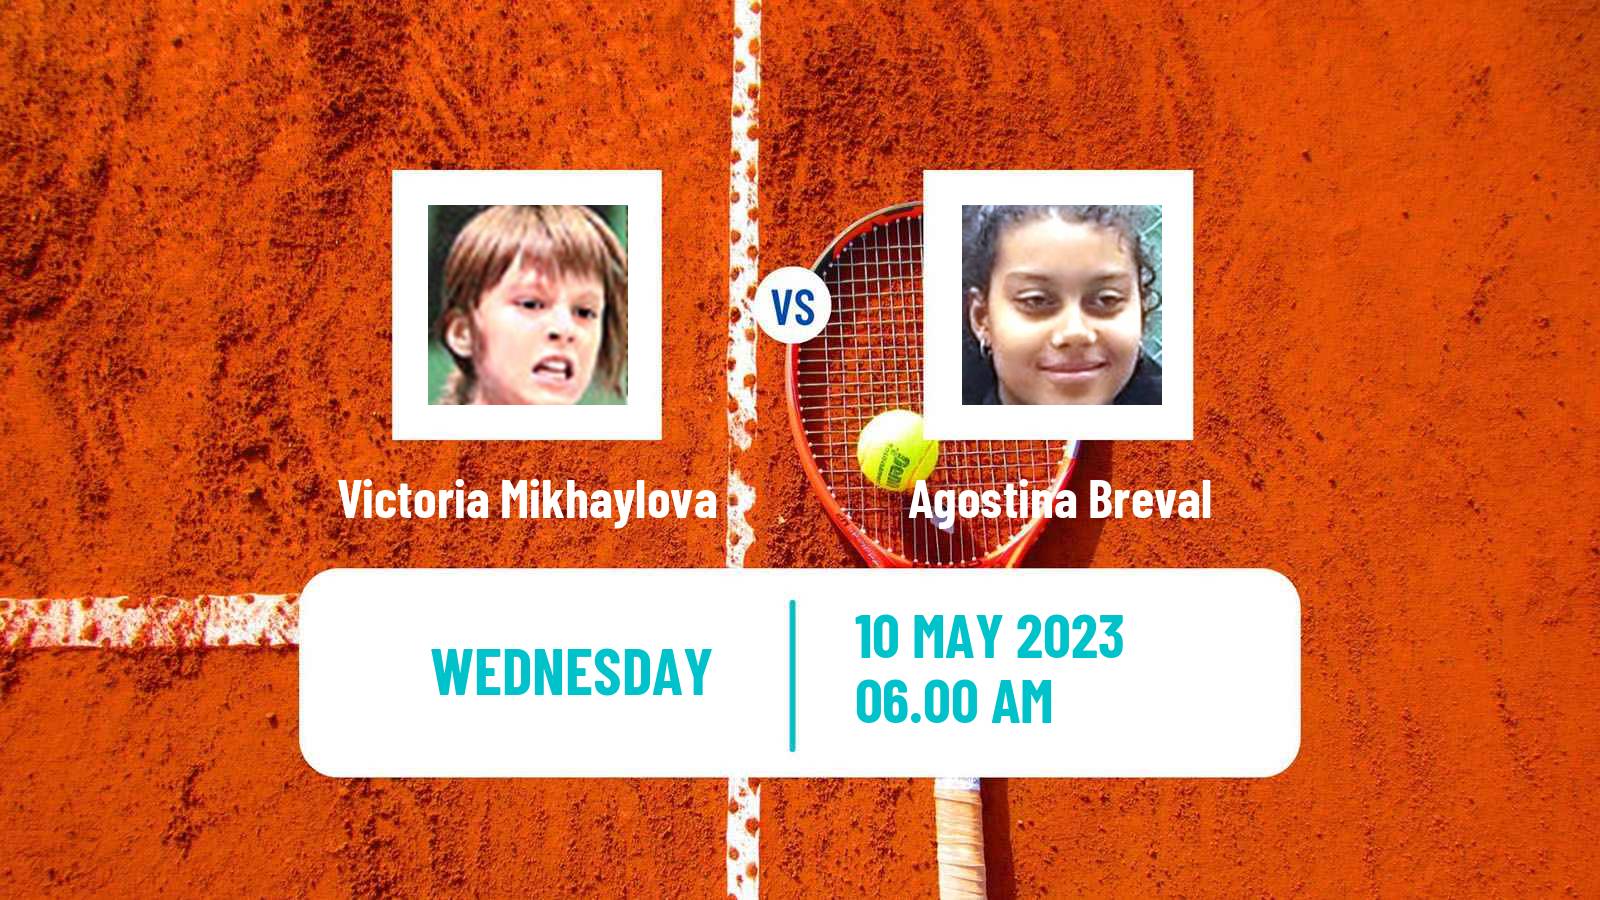 Tennis ITF Tournaments Victoria Mikhaylova - Agostina Breval